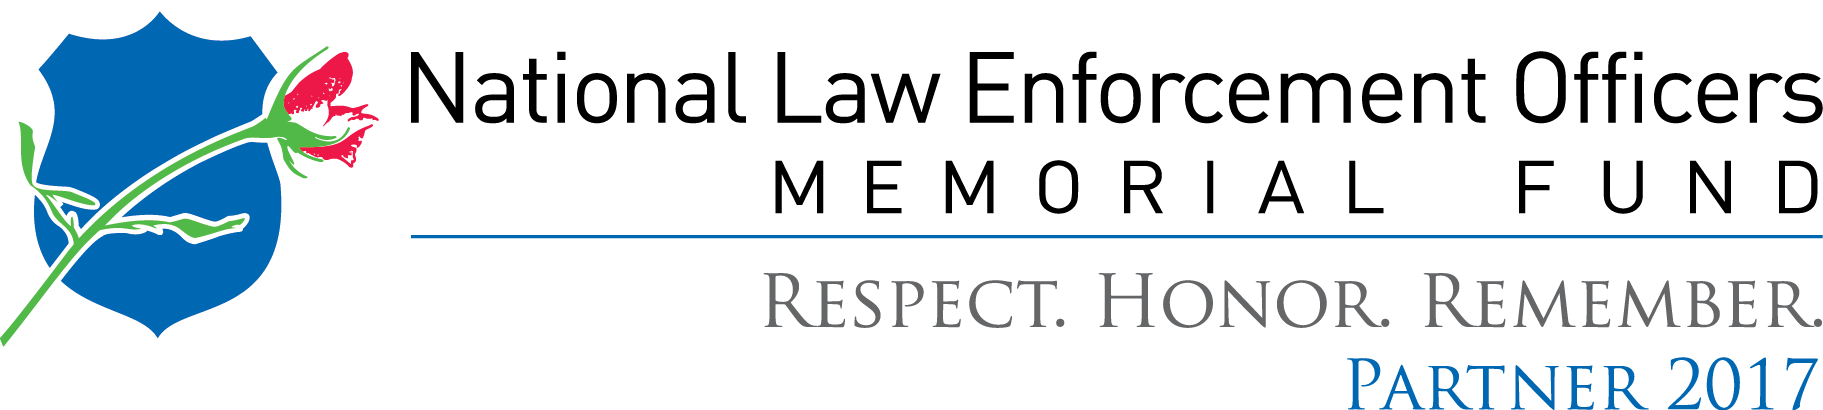 National Police Week - National Law Enforcement Officers Memorial (1823x410)